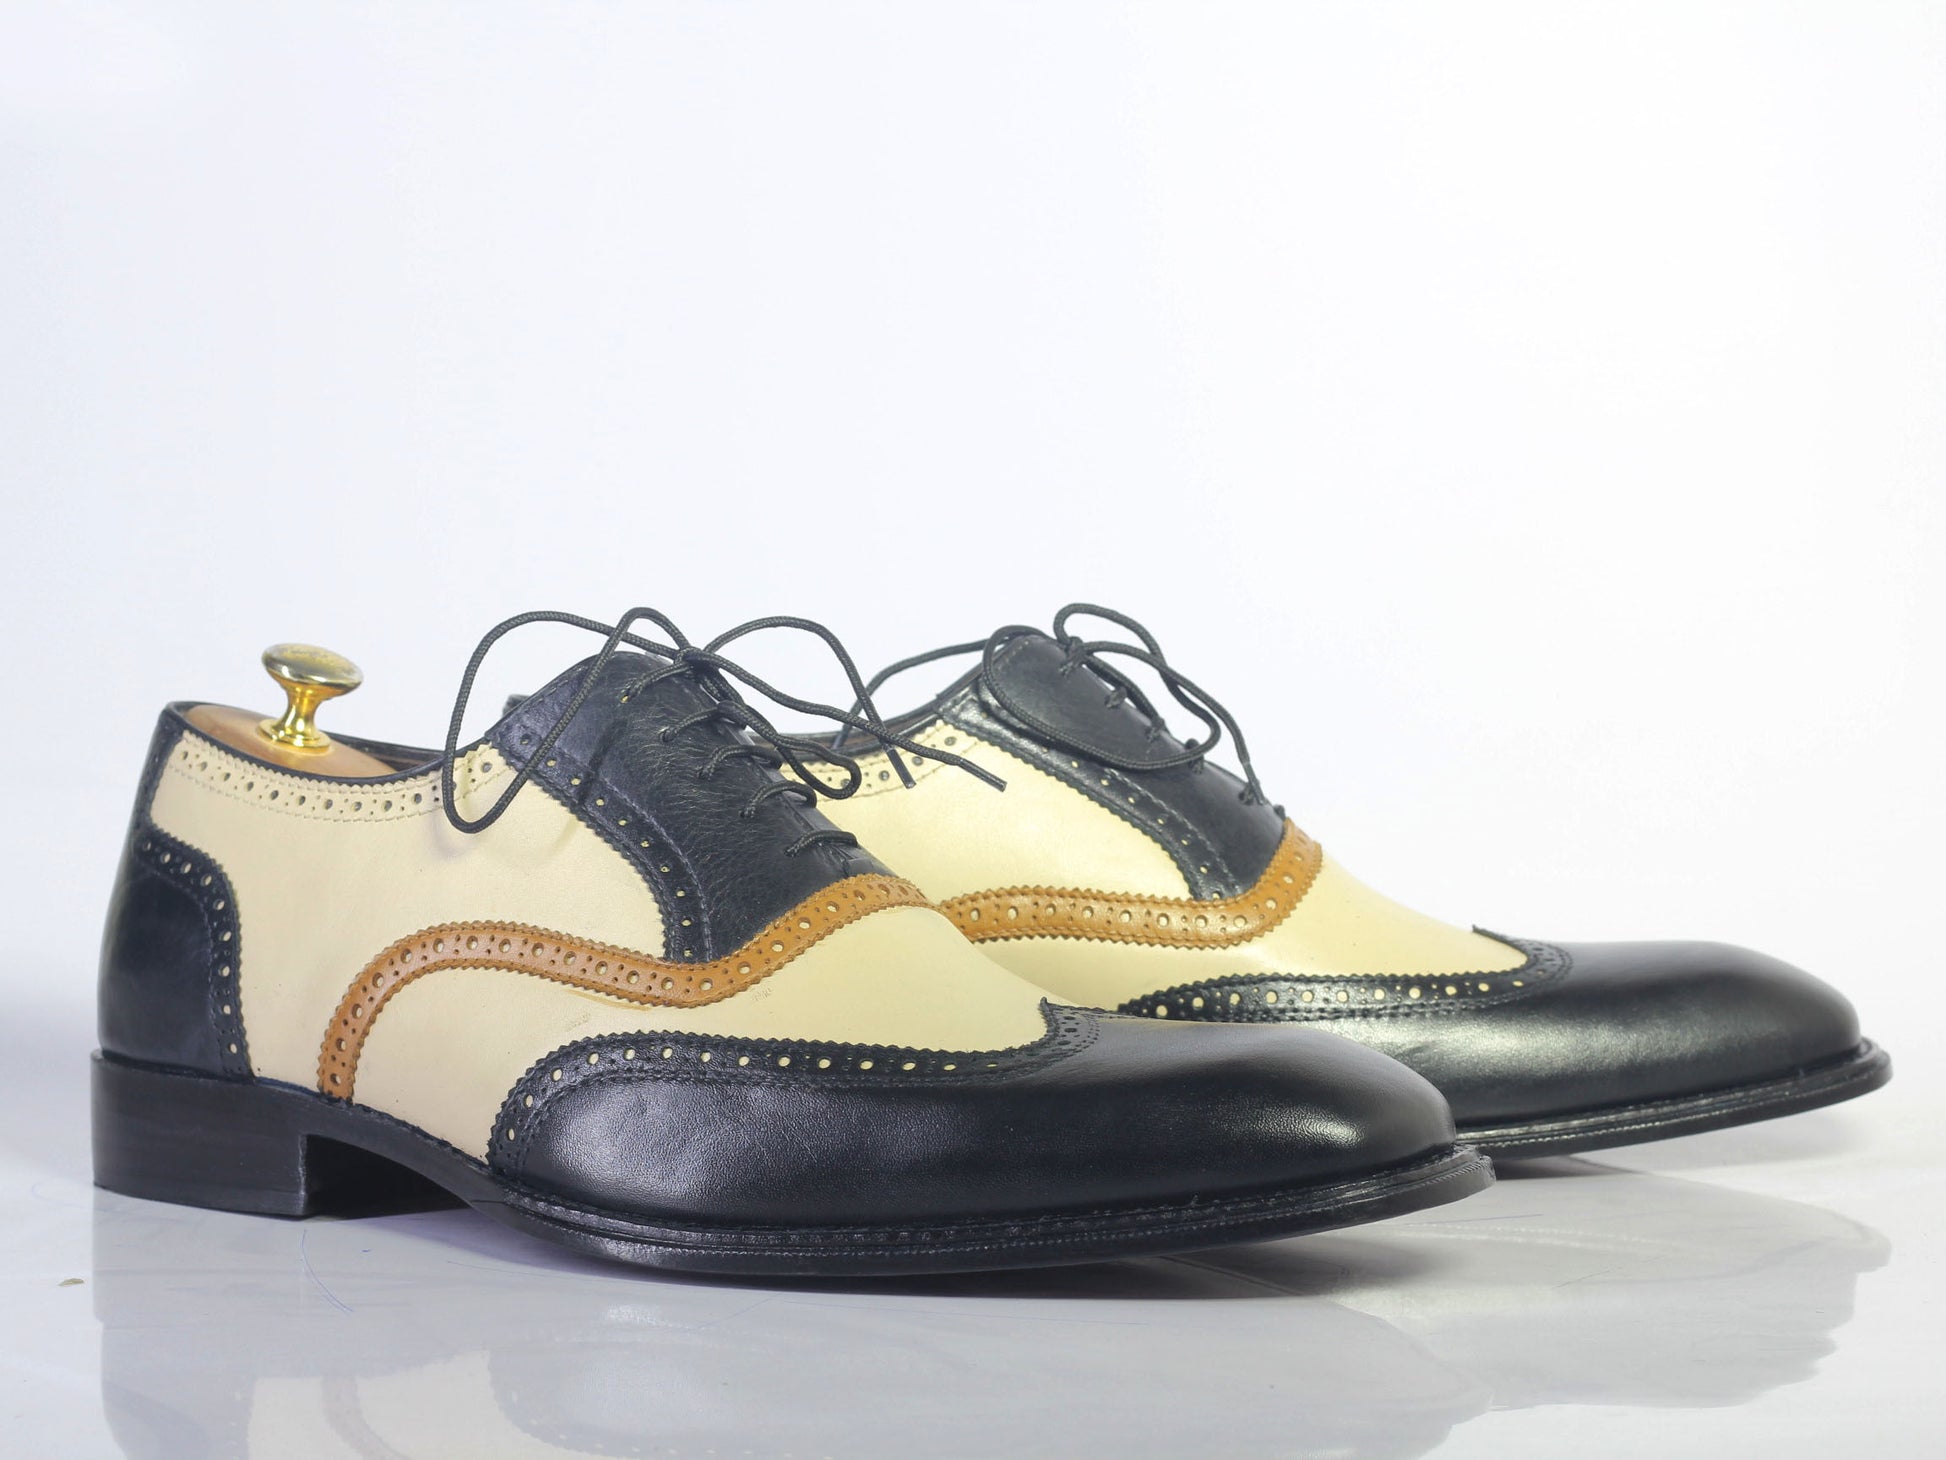 Handmade Men Multi-color Leather Wing Tip Dress Shoes, Men Formal Designer Shoes - theleathersouq